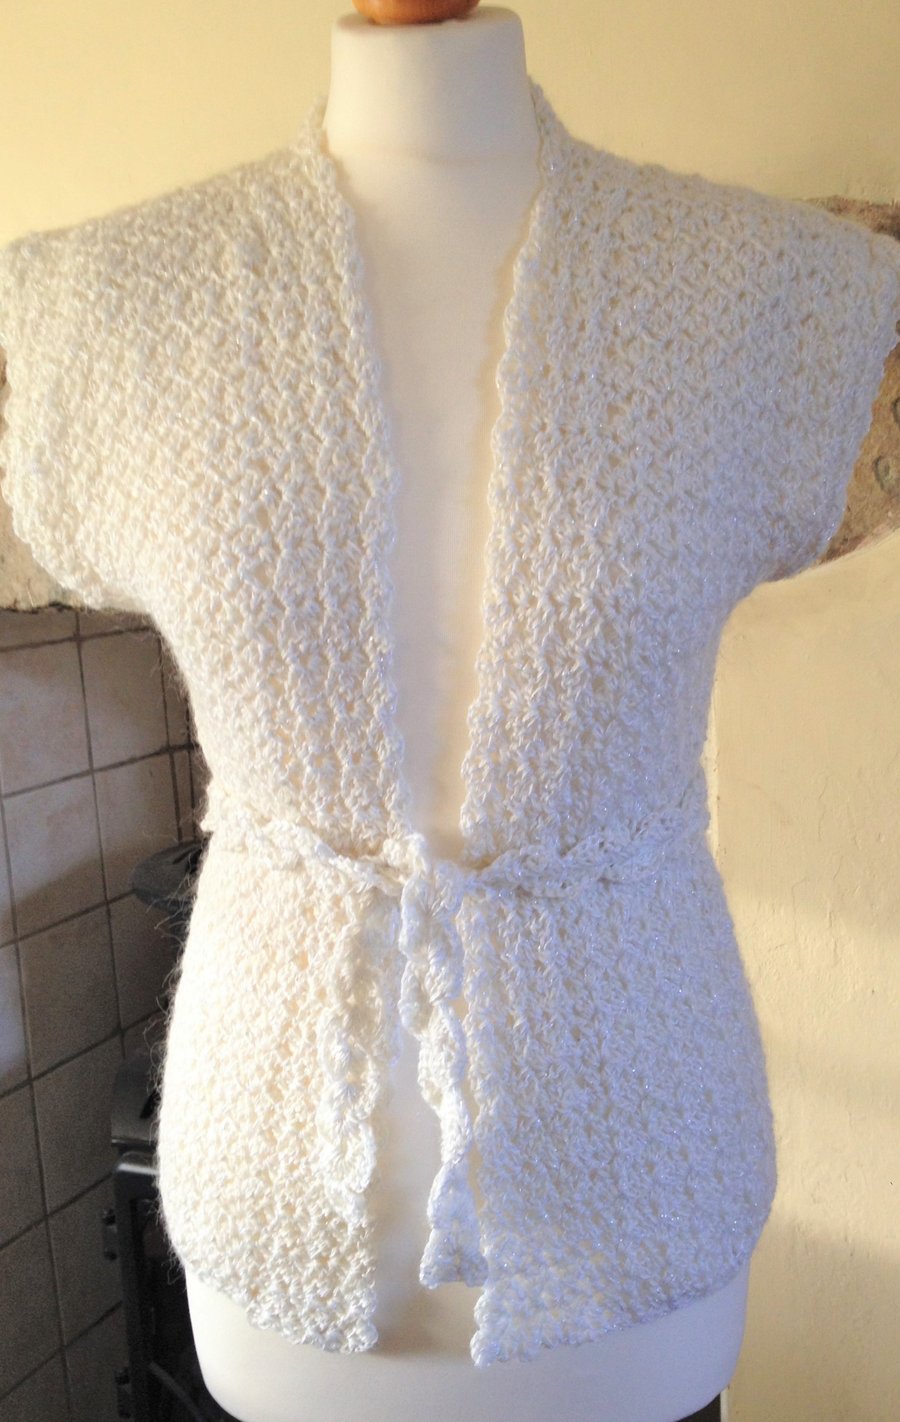 Angora crochet edge to egde cap sleeve top